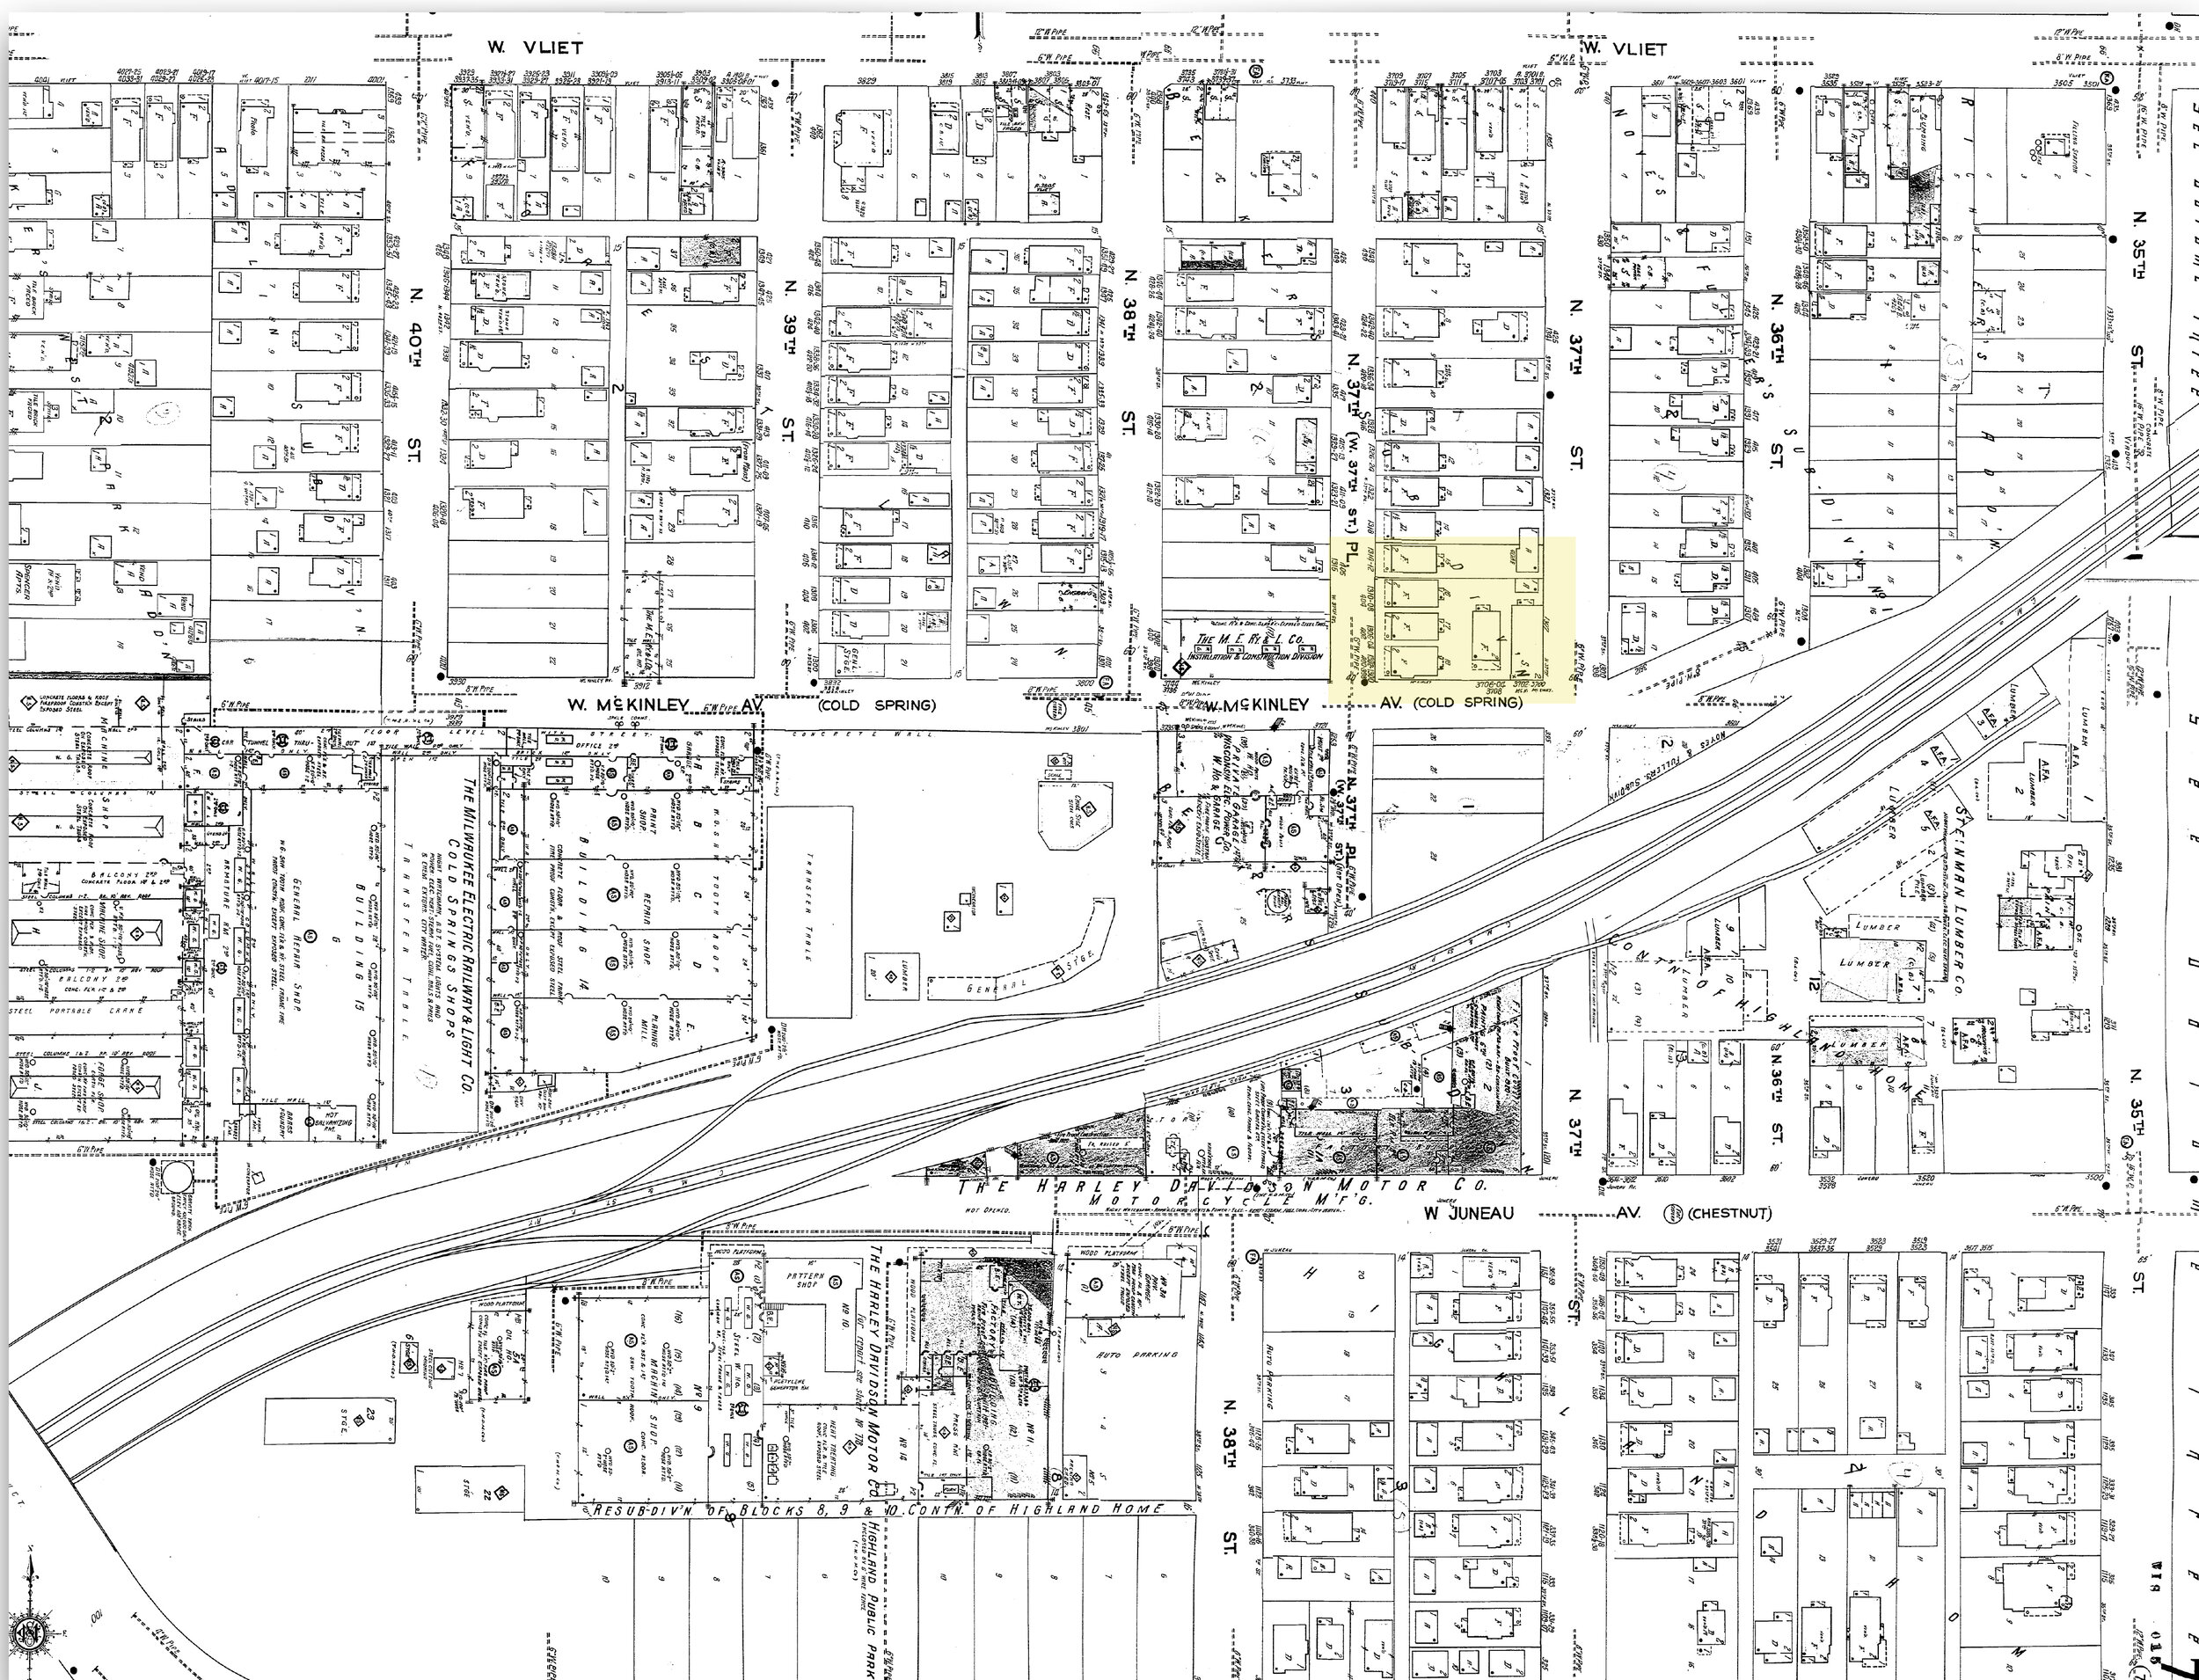  Figure 9. 1951 Sanborn Map showing the area around Foundation Park, Sanborn Map Company. Milwaukee, Wisconsin, 1951. Milwaukee 1910-Dec. 1951 vol. 7, 1927-Oct. 1949, Sheet 777, Environmental Data Resources, Inc., ProQuest, LLC., 2001–2020. 